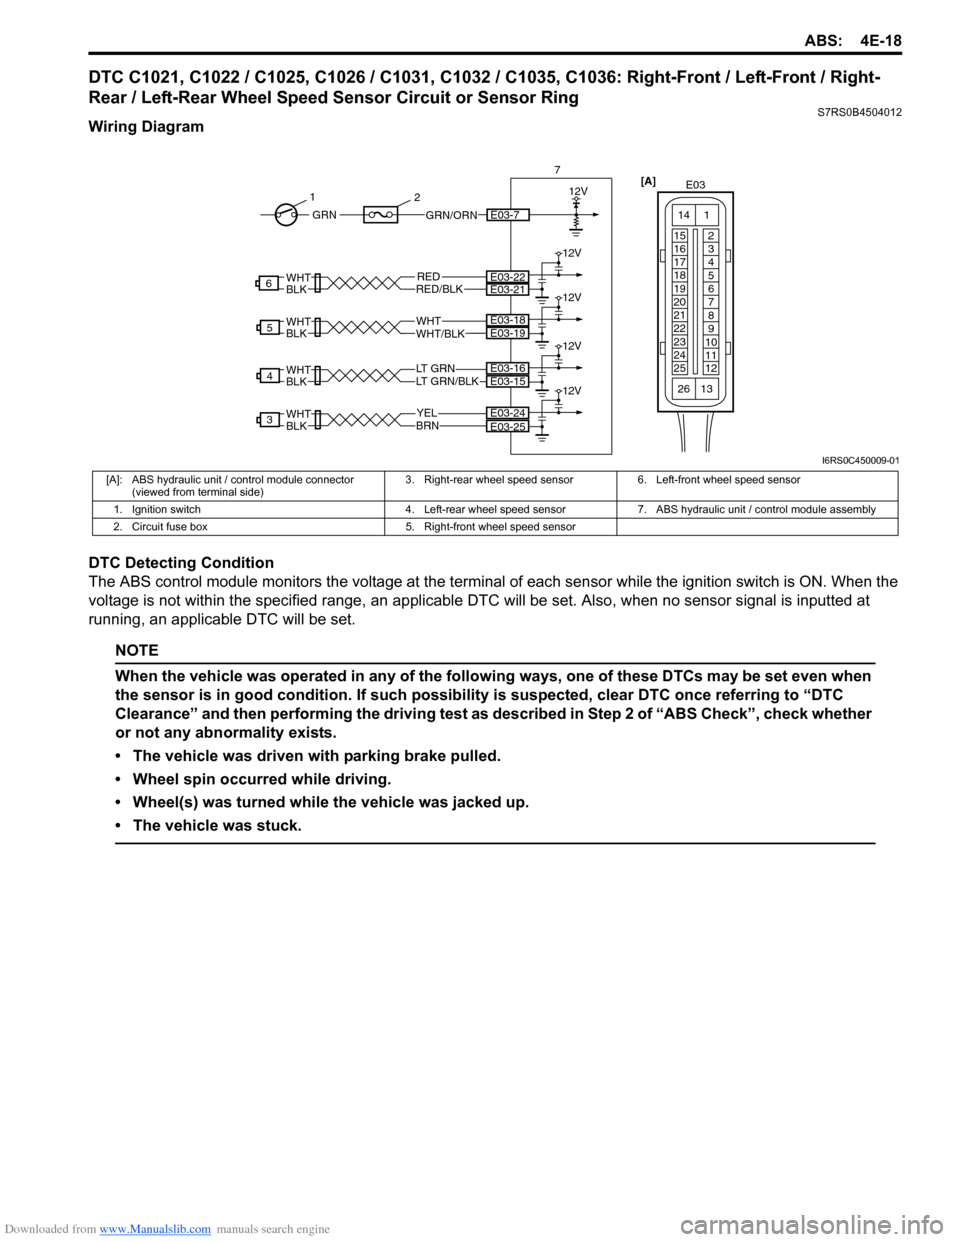 SUZUKI SWIFT 2008 2.G Service Service Manual Downloaded from www.Manualslib.com manuals search engine ABS: 4E-18
DTC C1021, C1022 / C1025, C1026 / C1031, C1032 / C1035, C1036: Right-Front / Left-Front / Right-
Rear / Left-Rear Wheel Speed Sensor